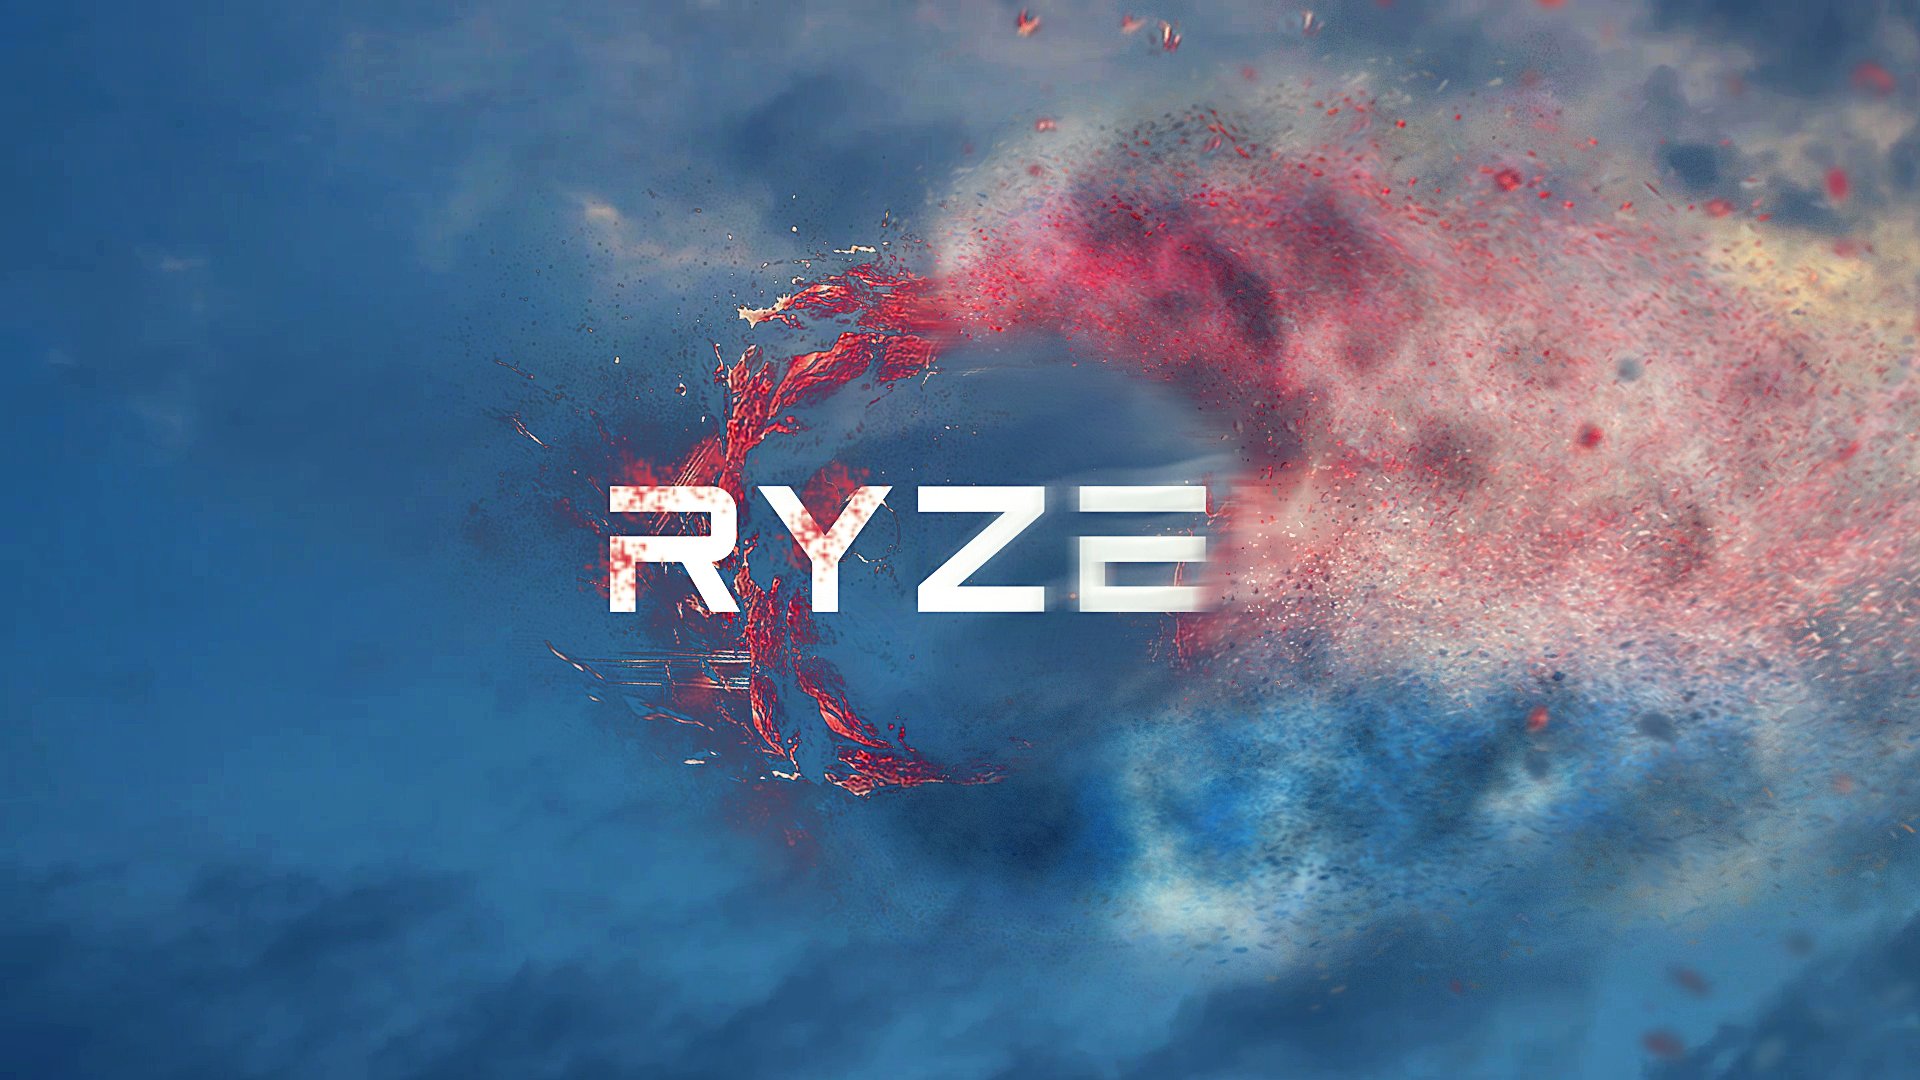 Ozzy on Twitter: "My entry for #RyzenSuperfan #Sweepstakes some fan